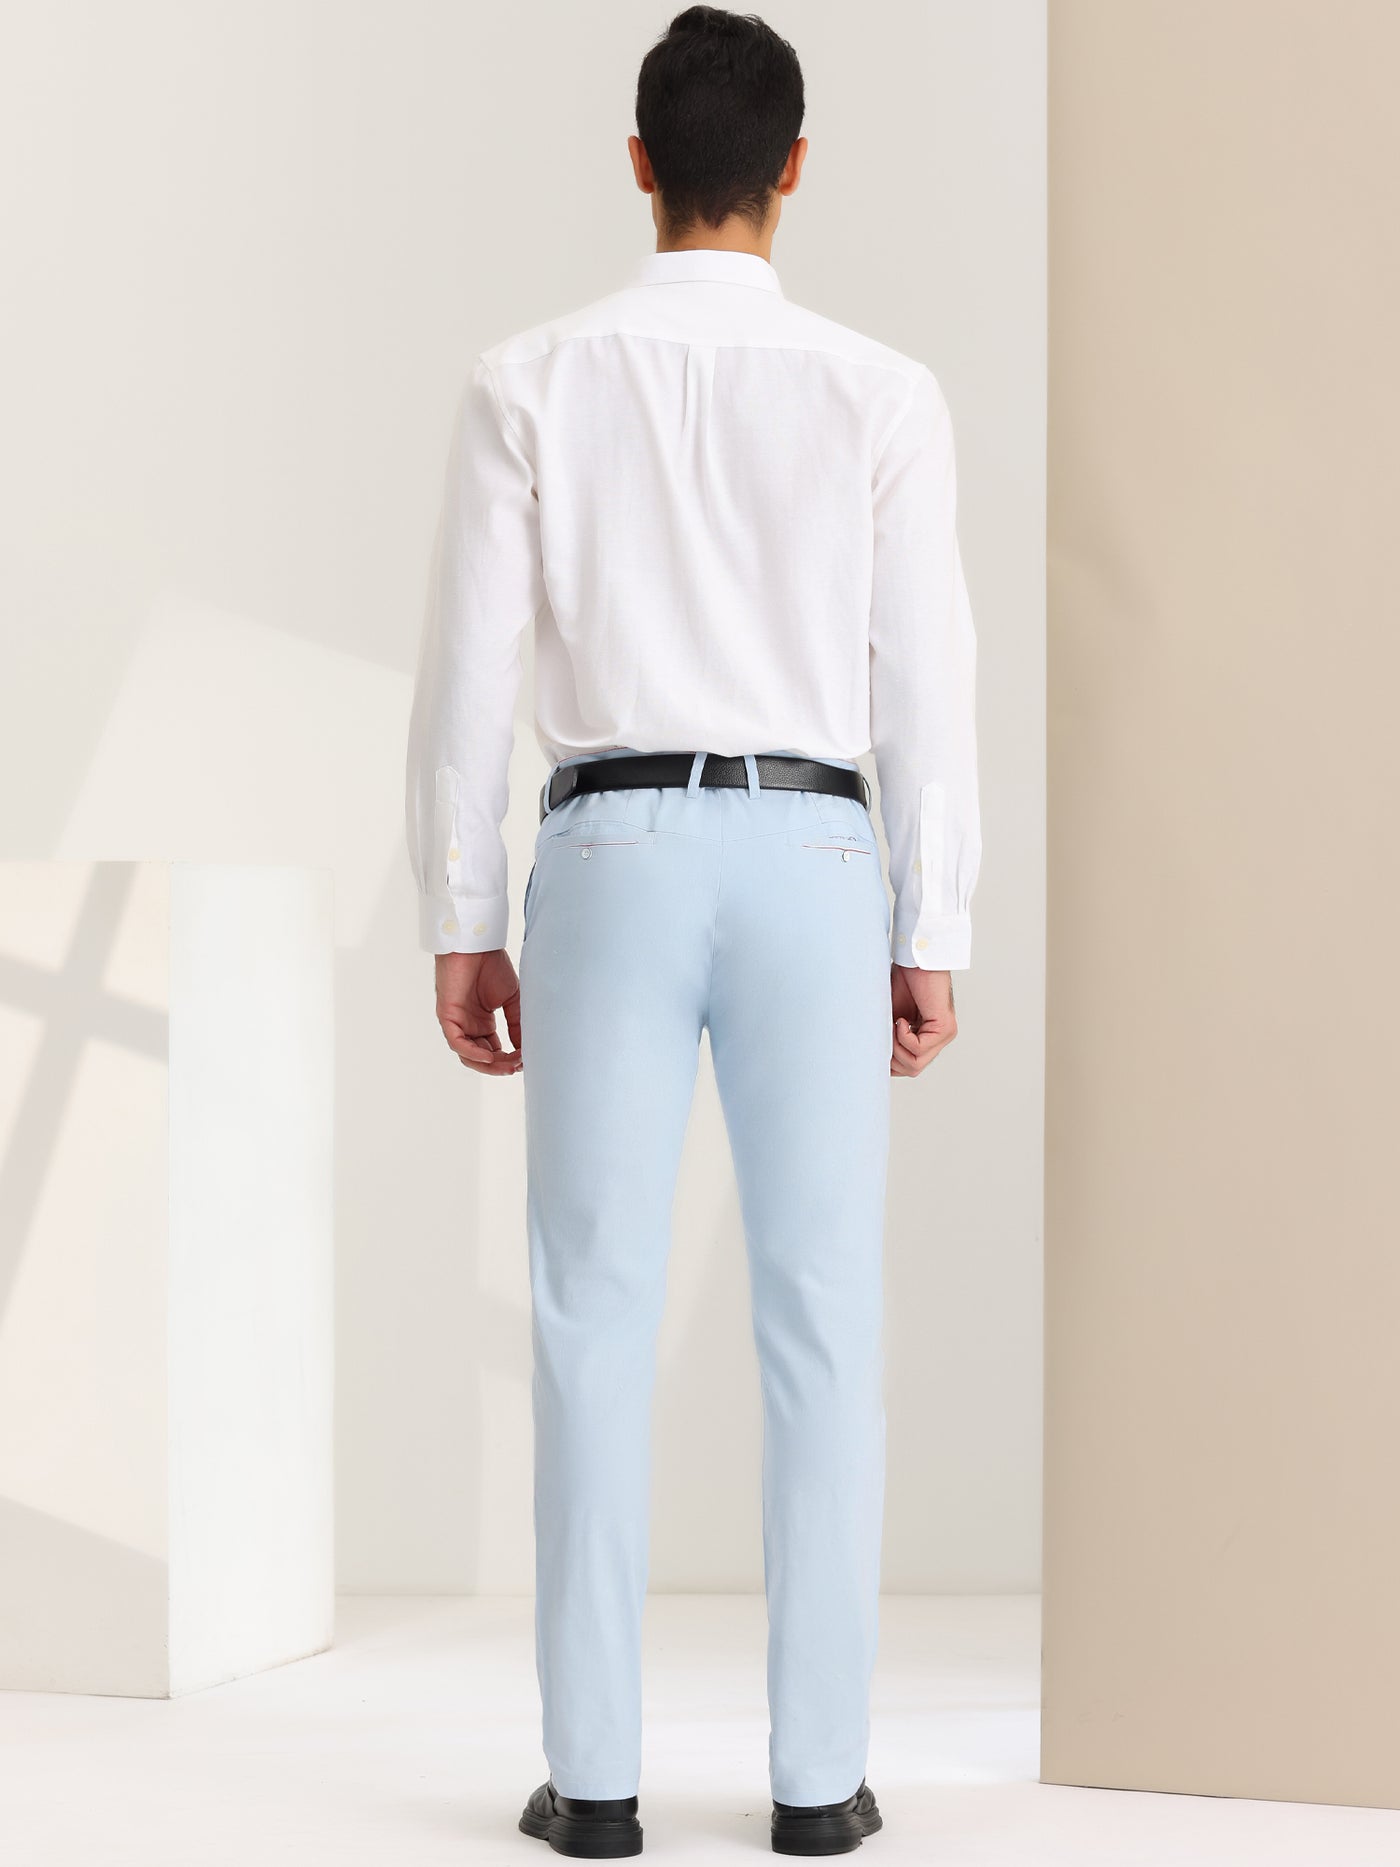 Bublédon Men's Suit Pants Slim Fit Flat Front Stretch Chino Business Dress Trousers